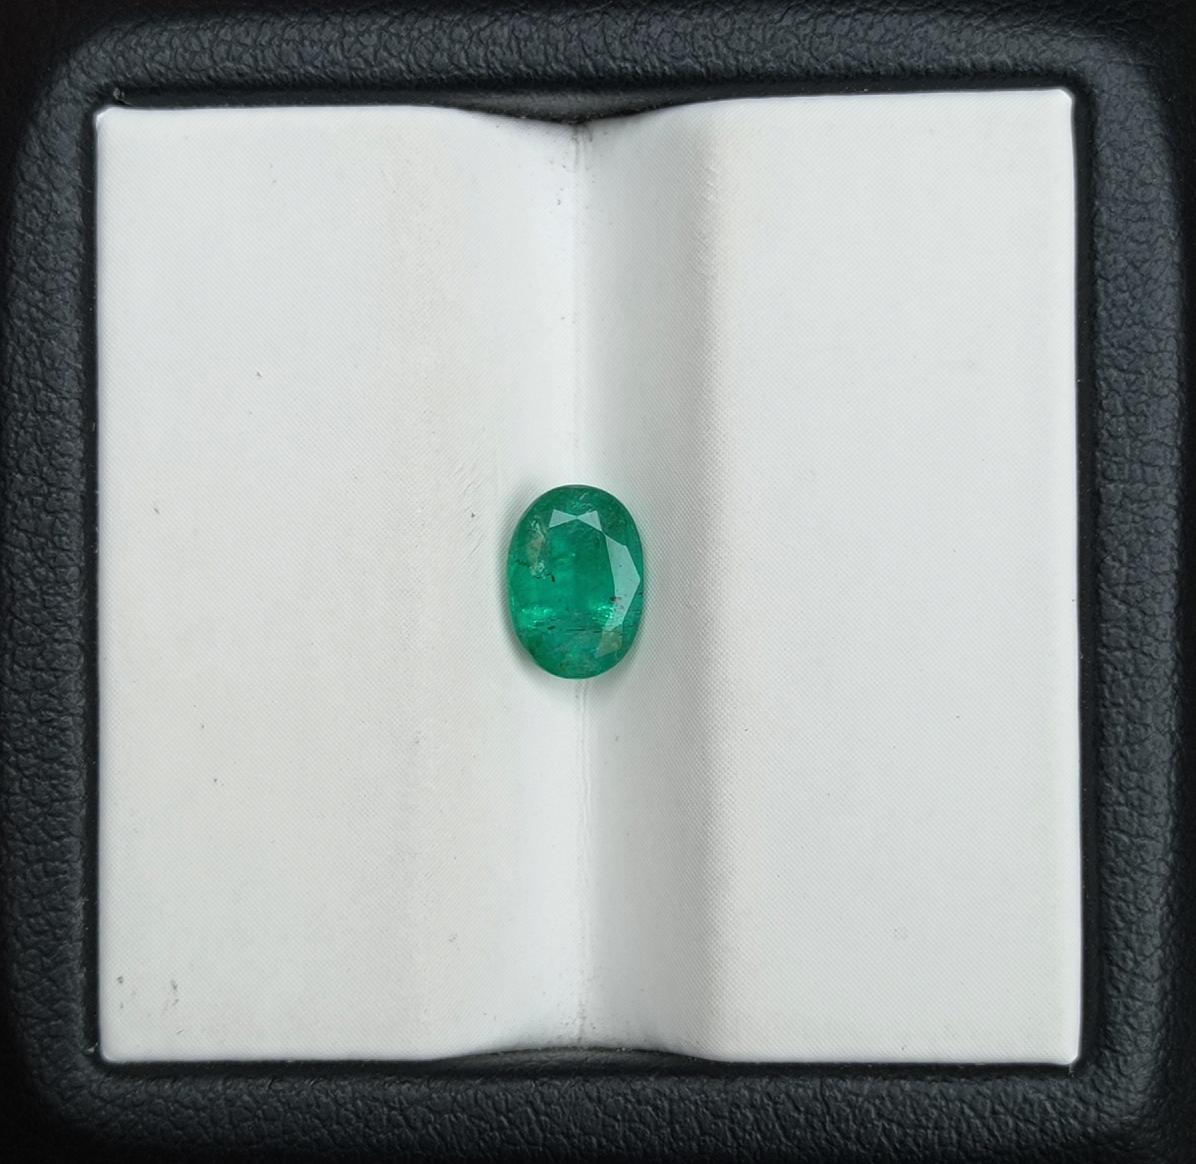 0.80ct Emerald for sale - Budh Ratna - Zamurd - Pachu Stone, Markat Mani Stone - 7x5x3mm